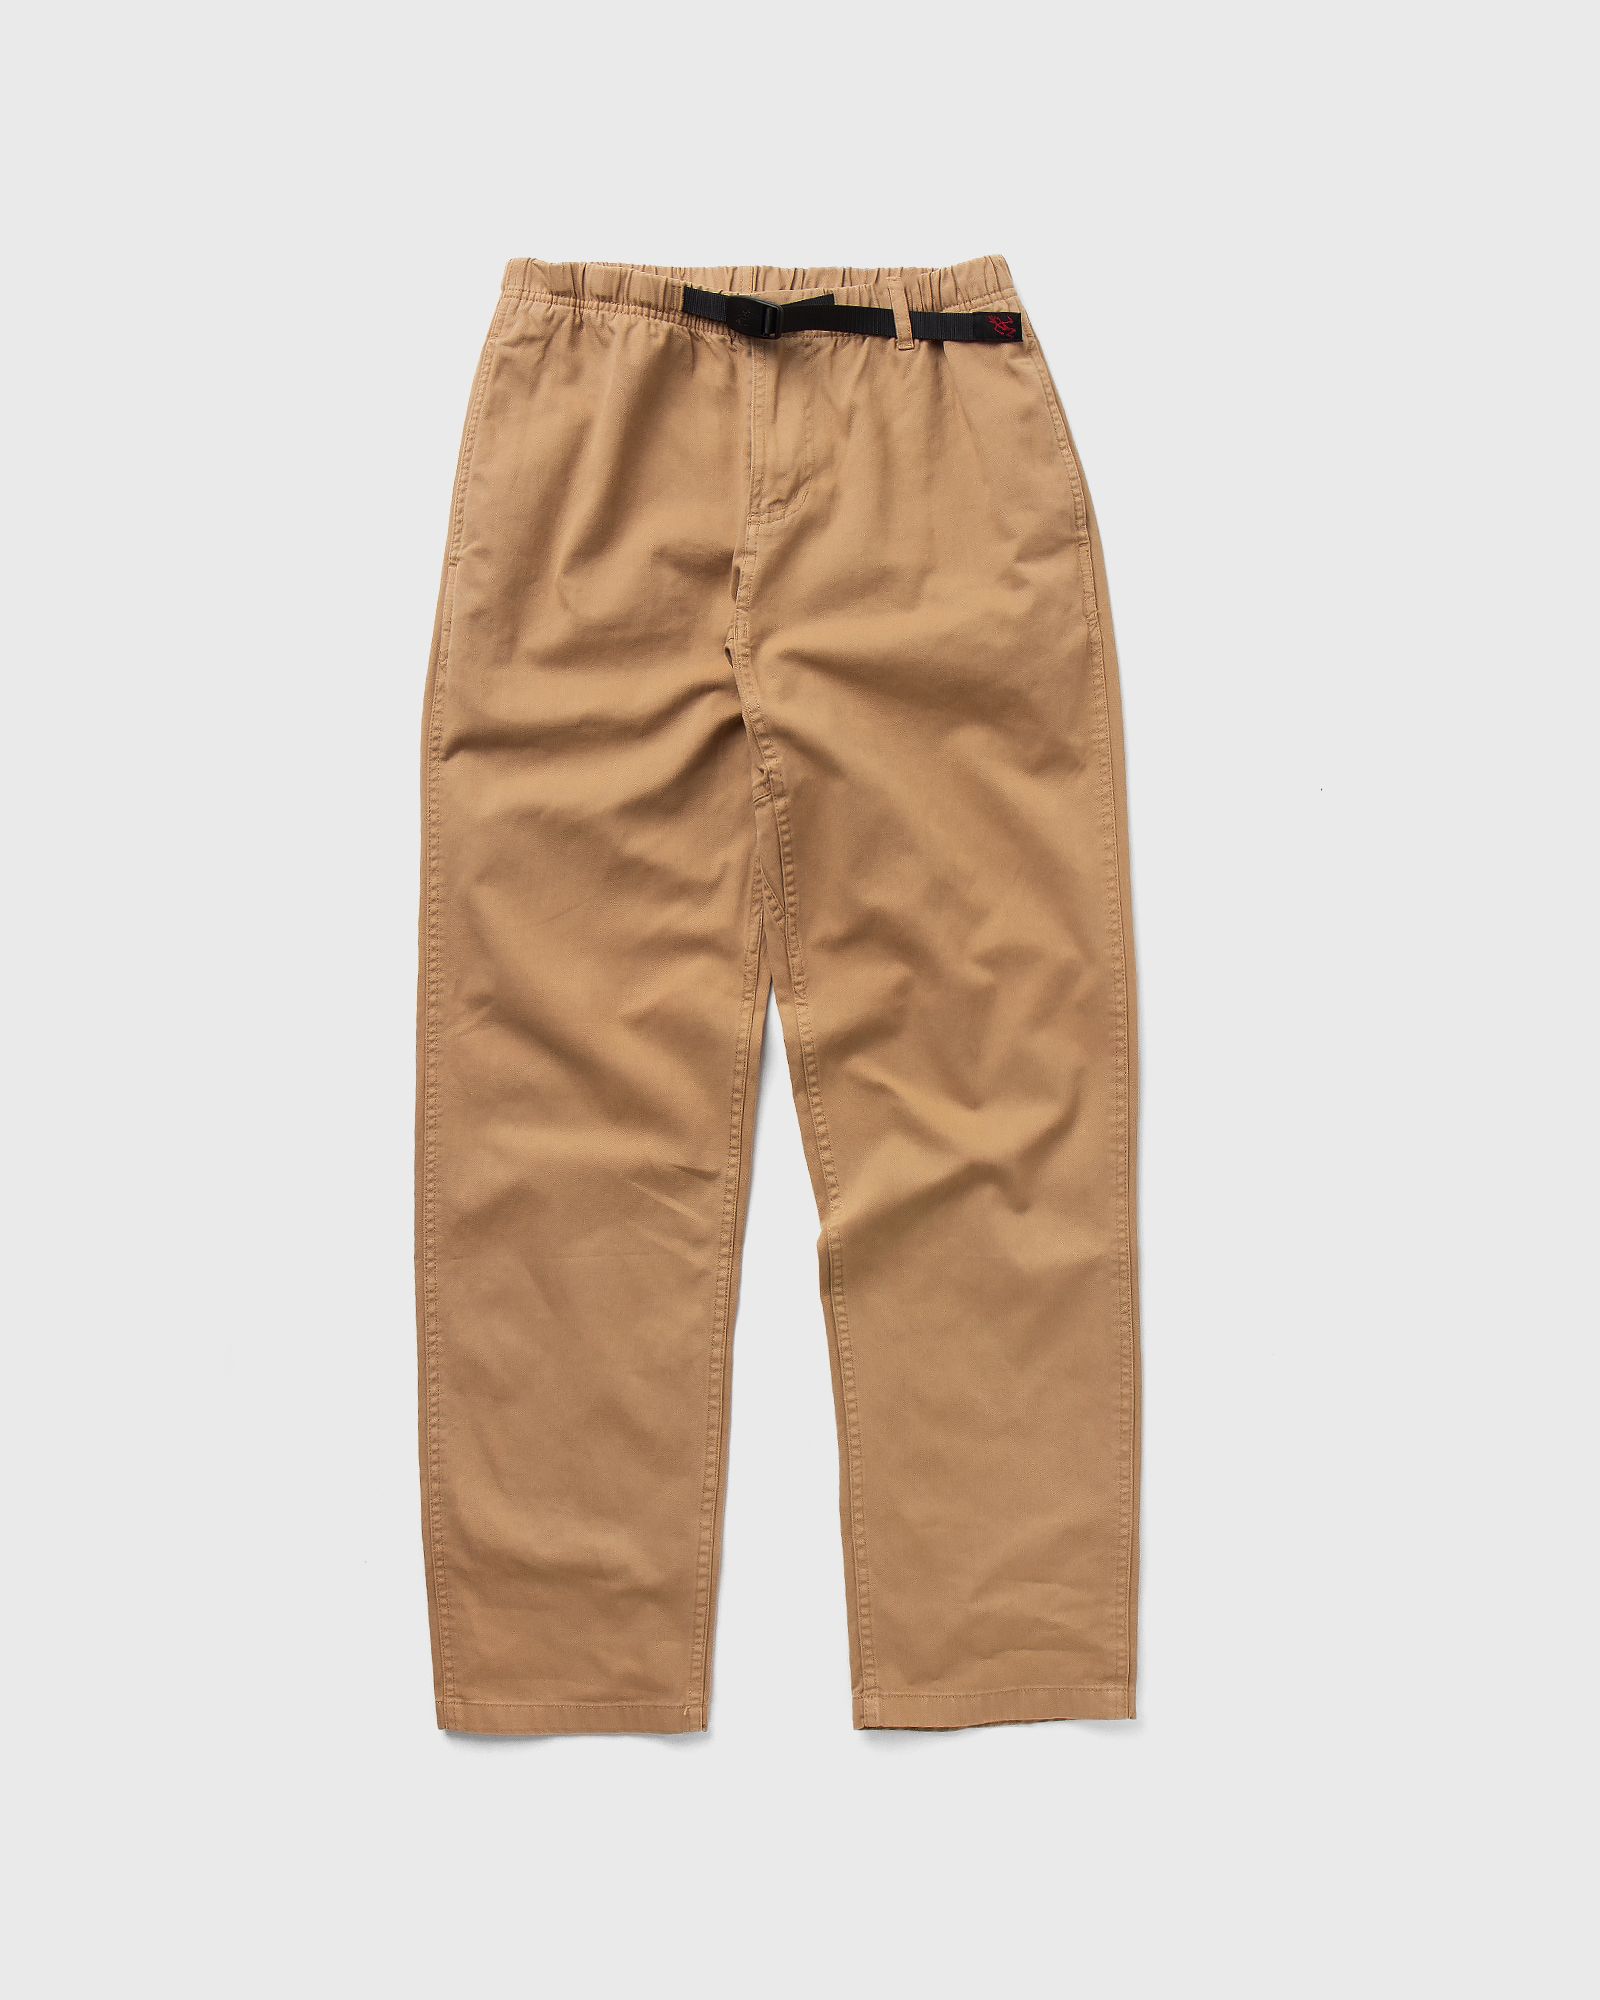 Gramicci - pant men casual pants brown in größe:s